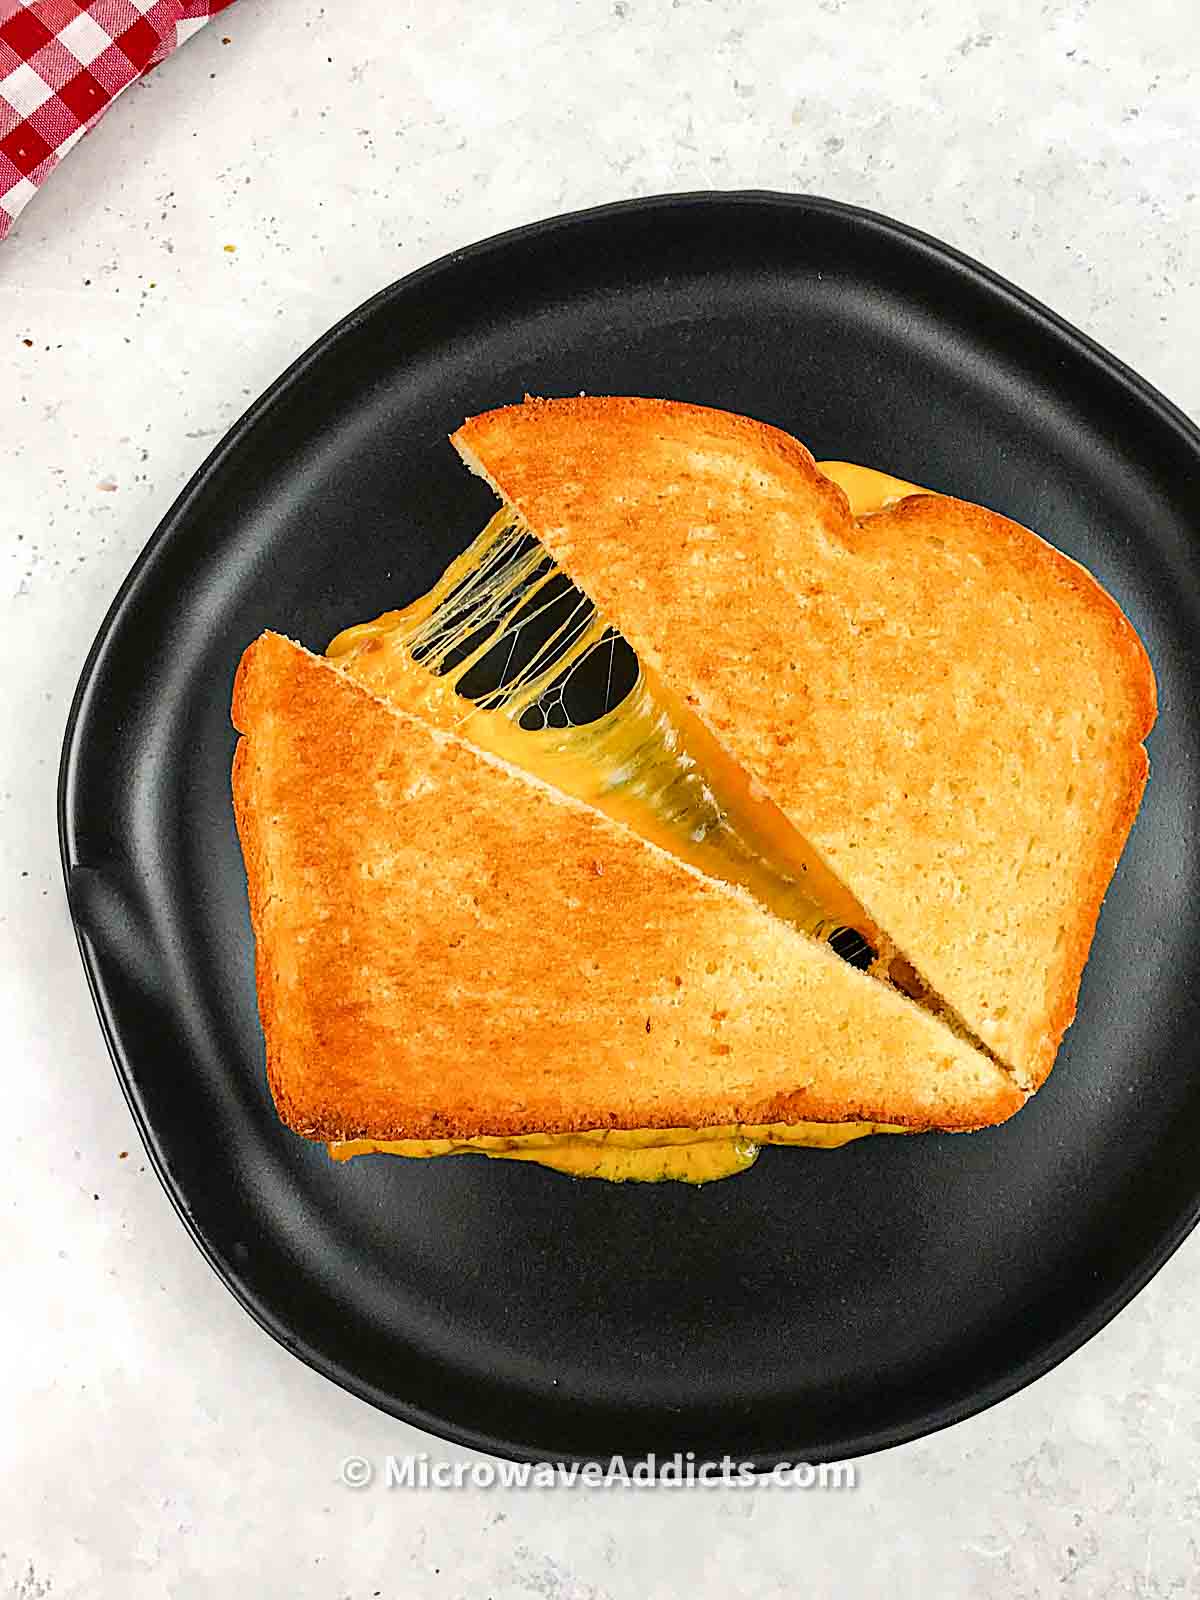 Microwave Crispy Grilled Cheese Sandwich (Legit Magic) - Dorm Room